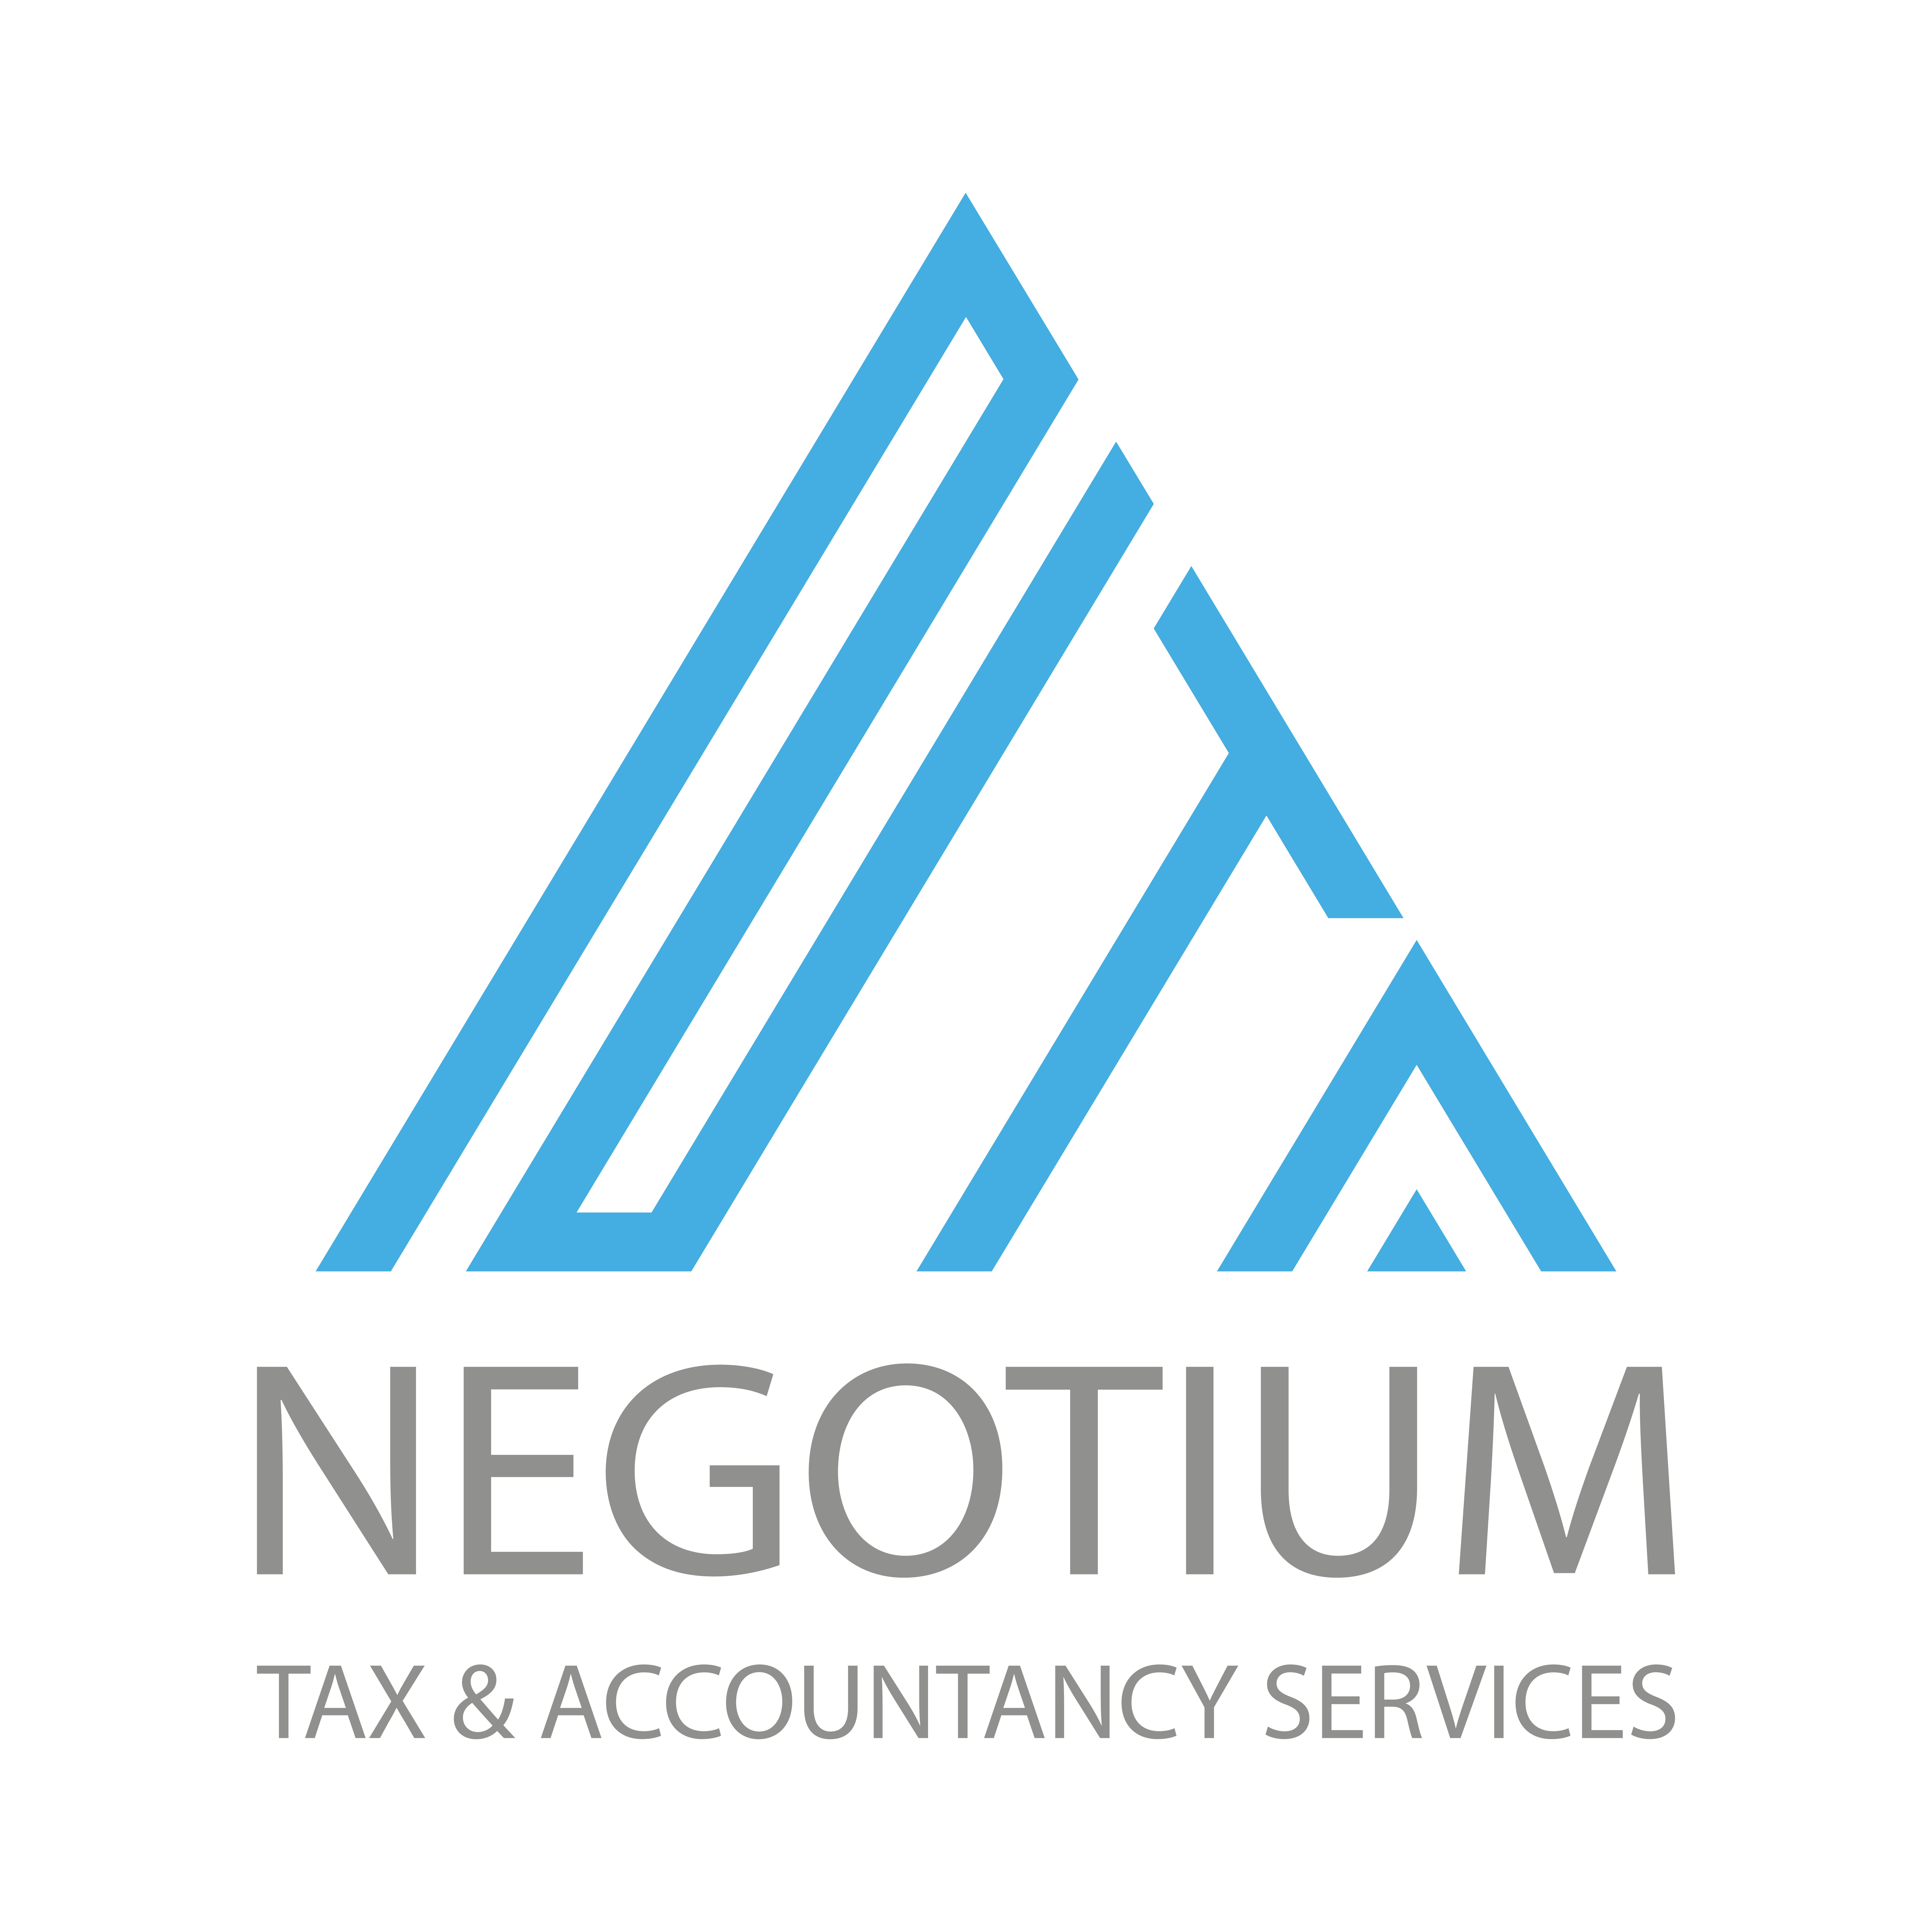 NEGOTIUM TAX & ACCOUNTANCY SERVICES (SMC-PRIVATE) LIMITED